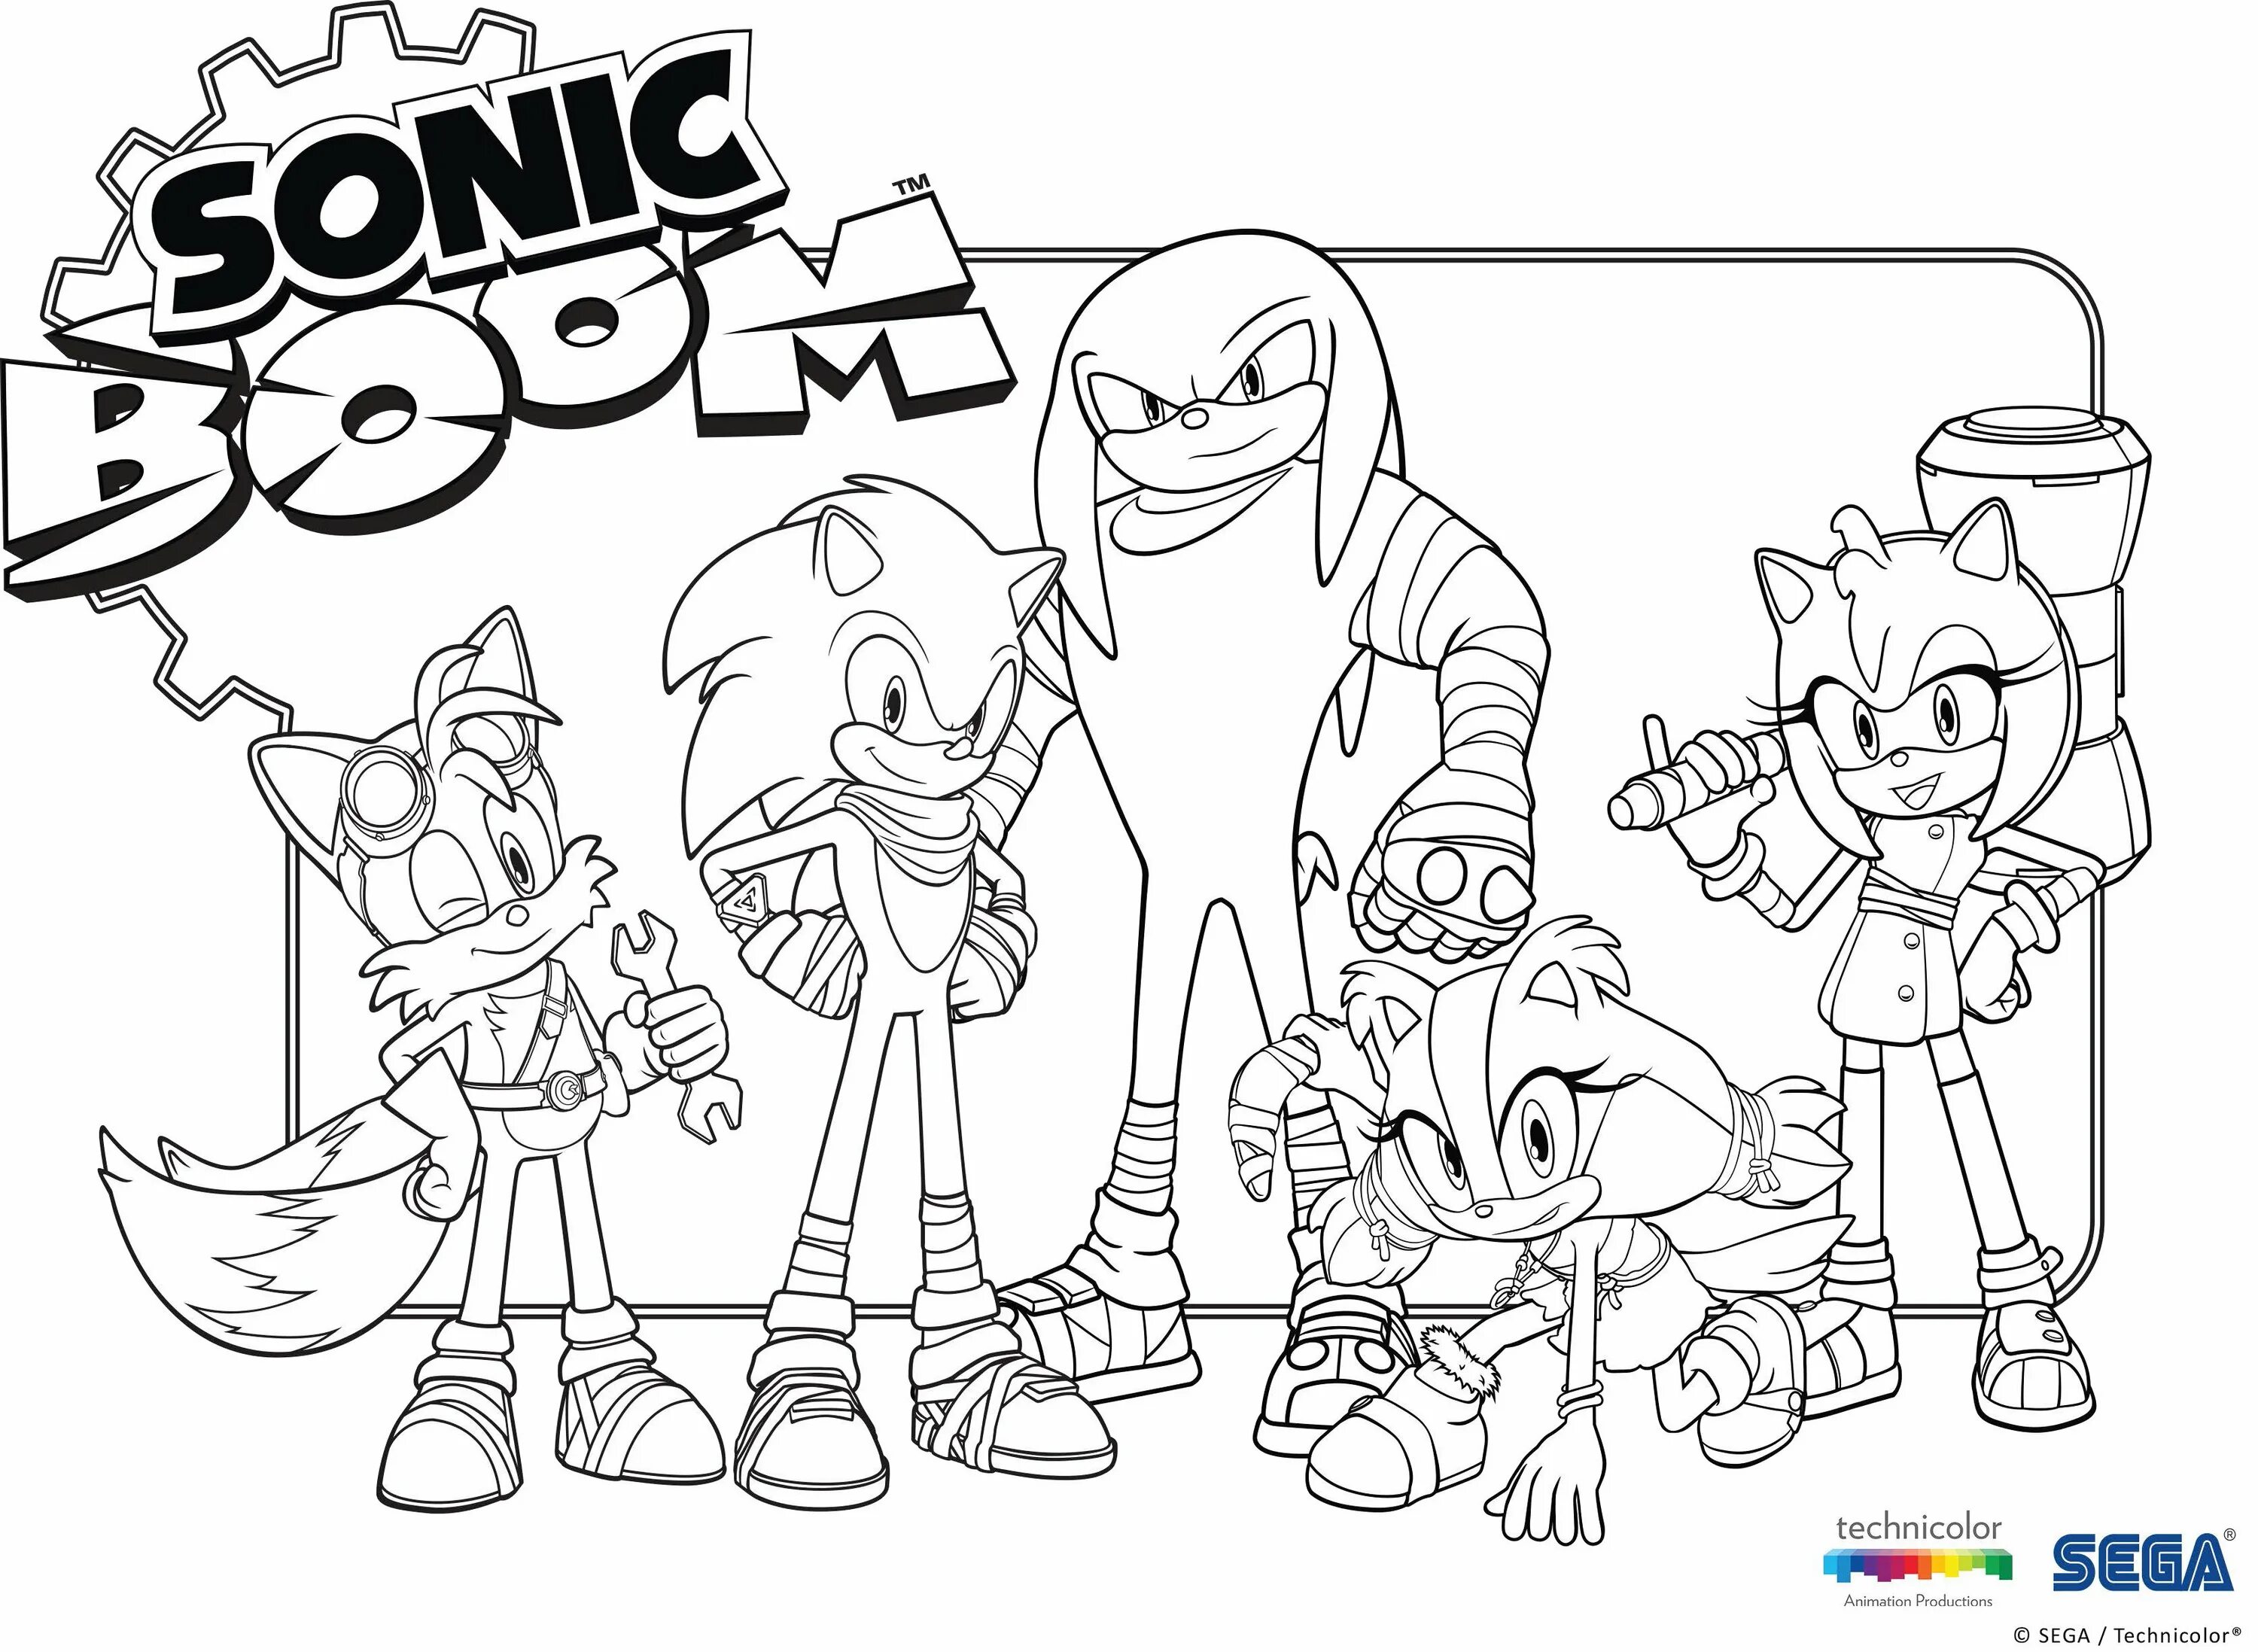 Sonic team #7